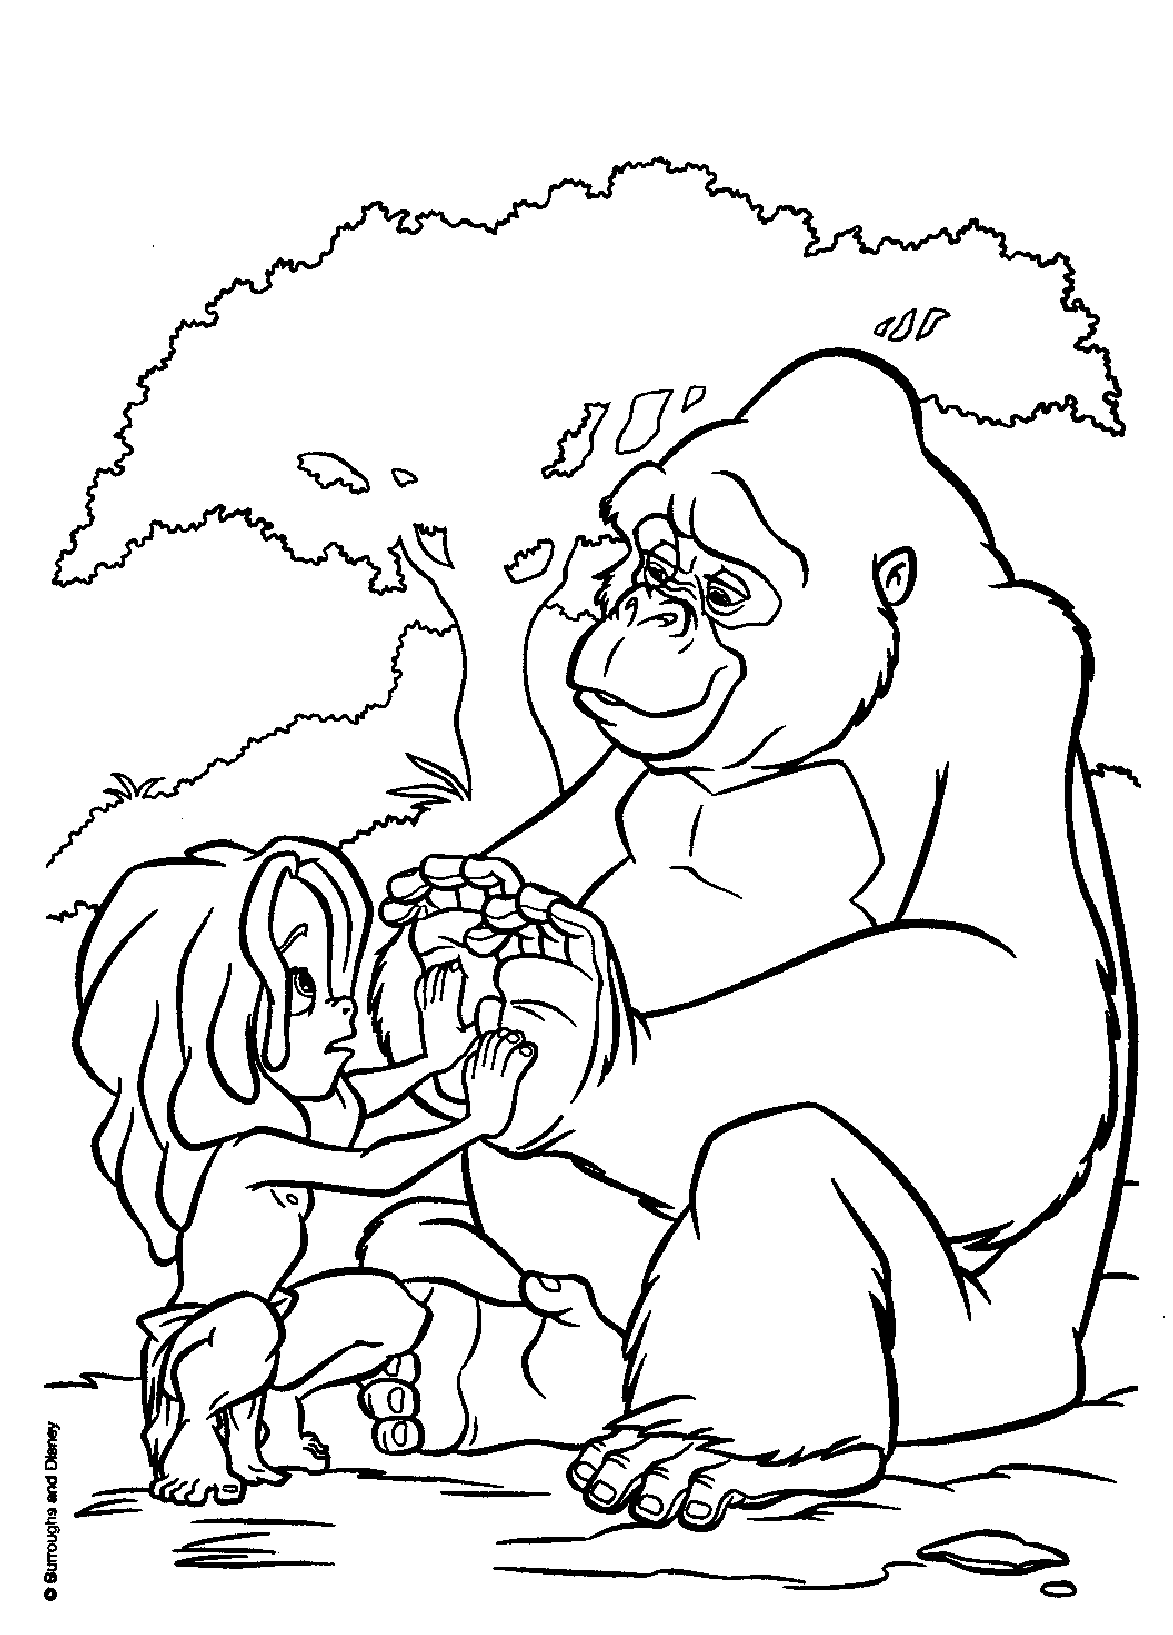 Tarzan petit avec sa mère adoptive